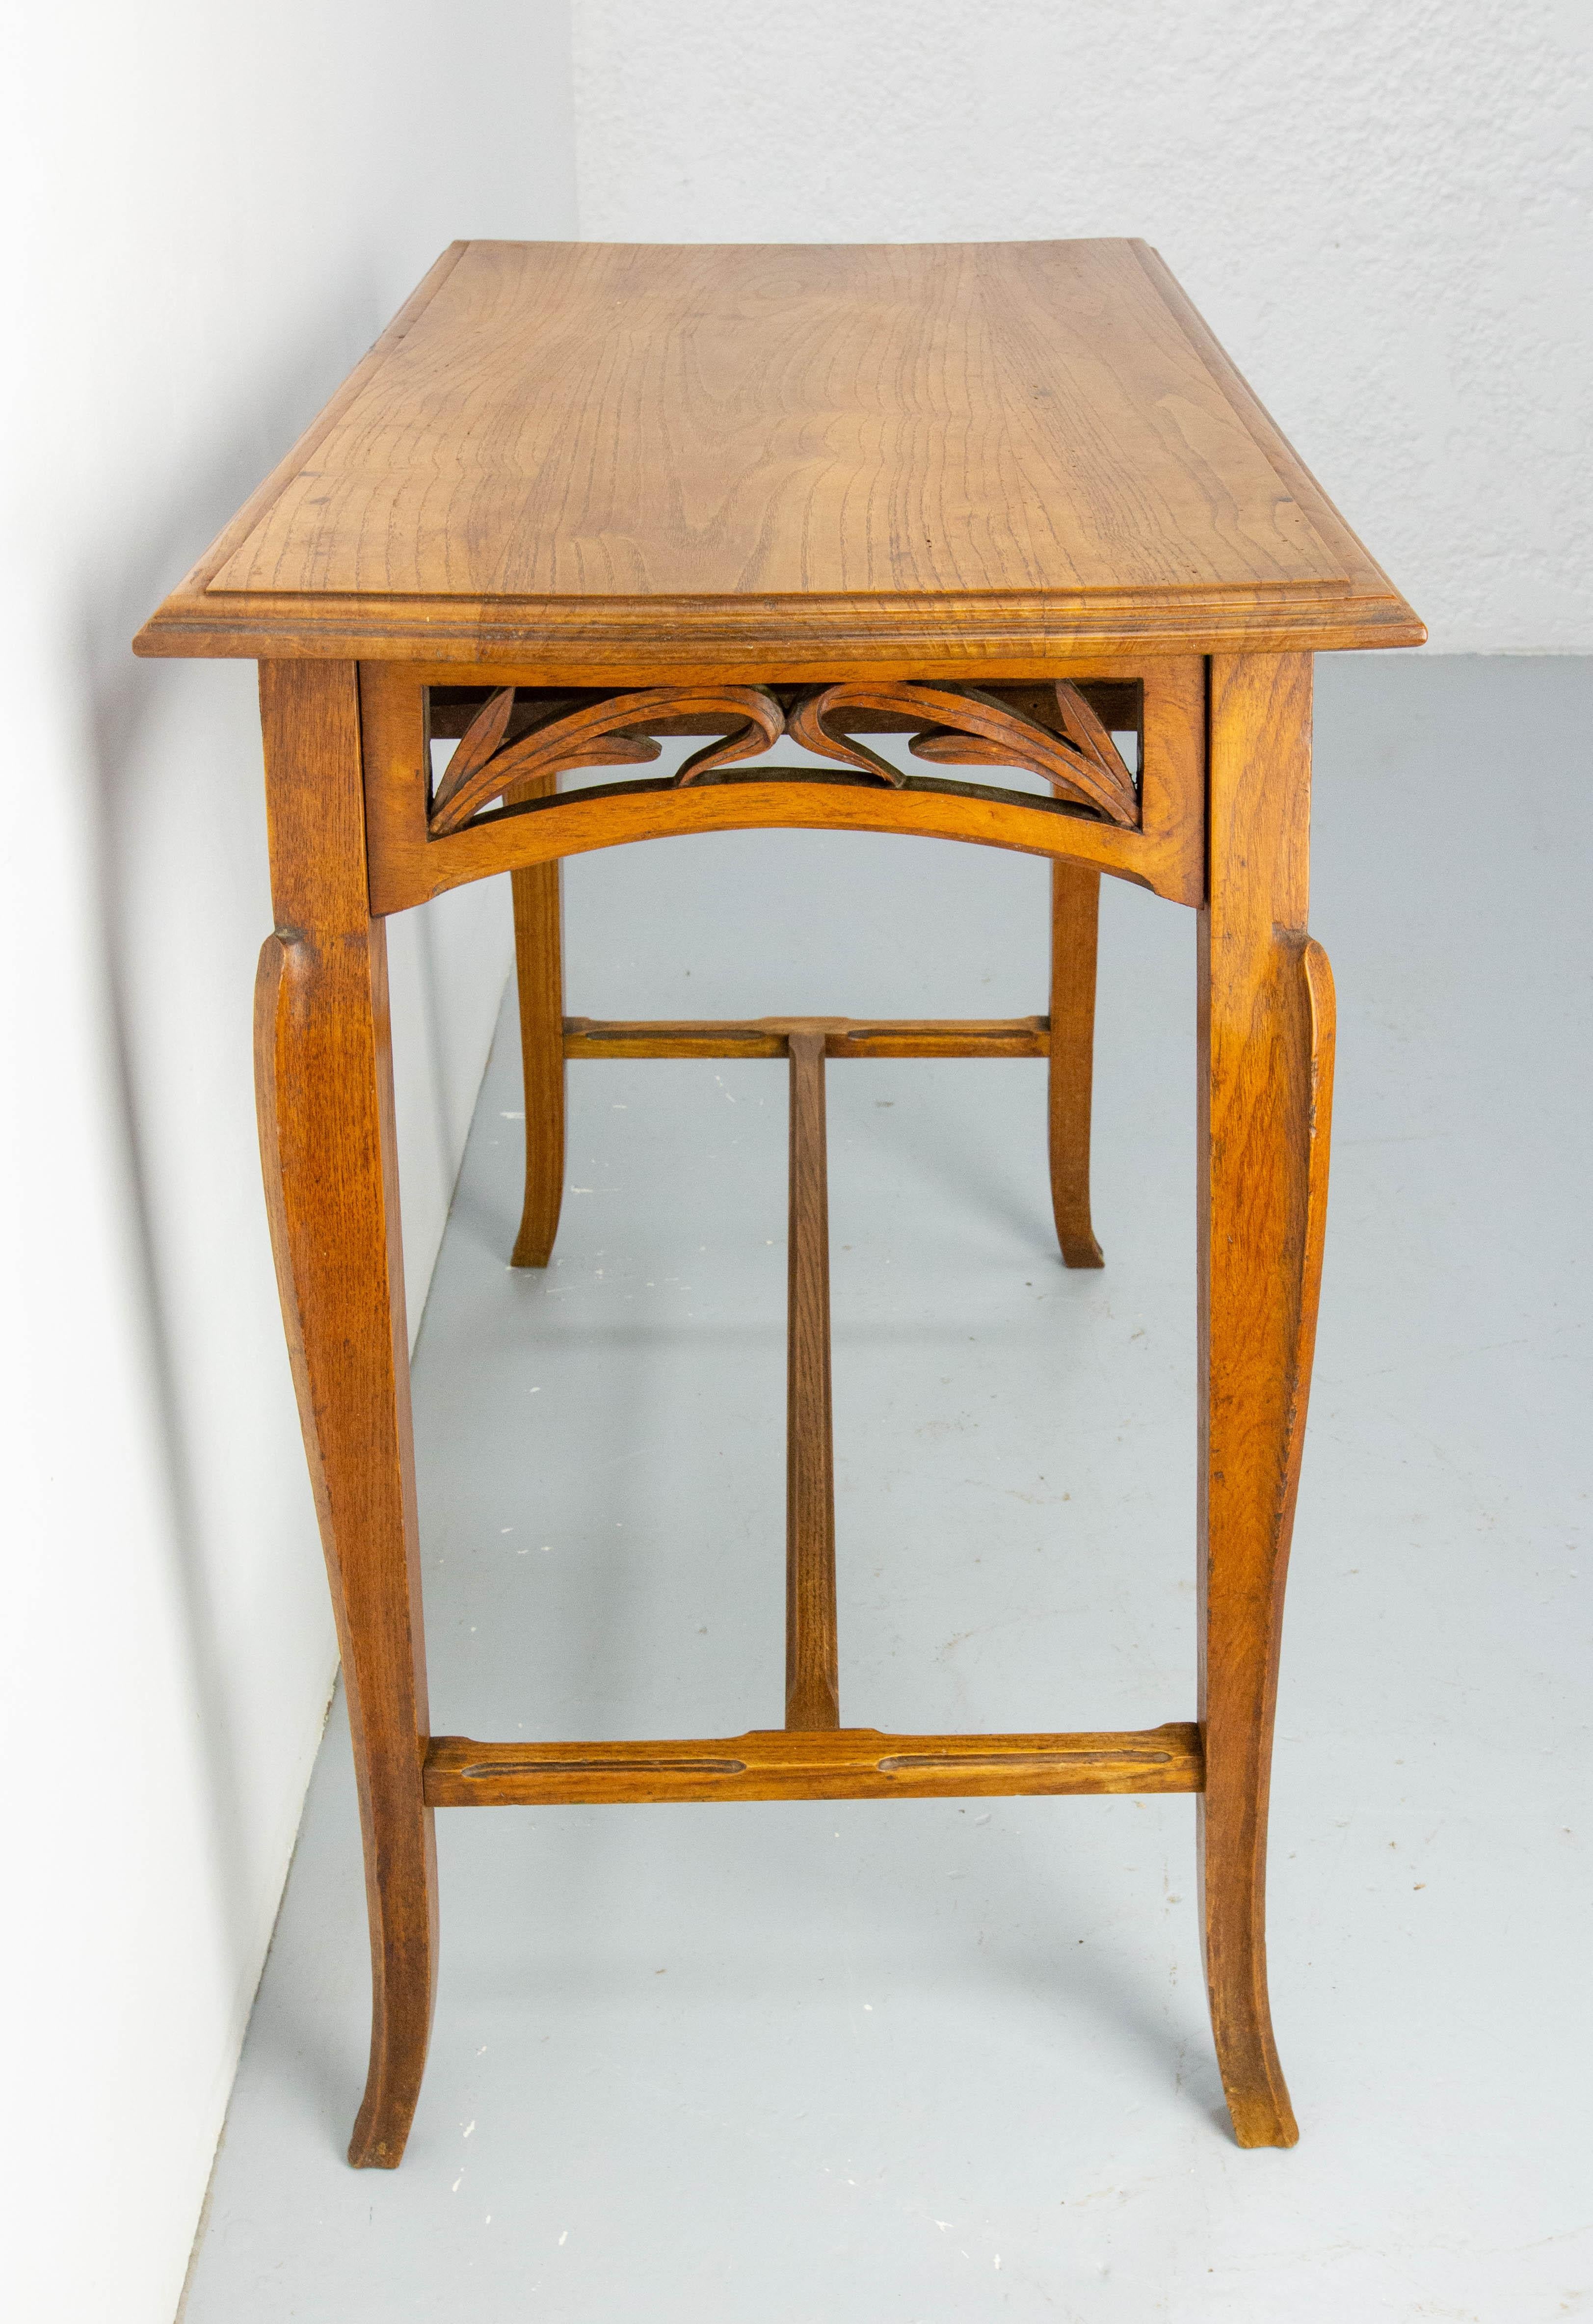 20th Century French Art Nouveau Oak Side Table Writing Table Vegetal Ornementation, c 1900 For Sale